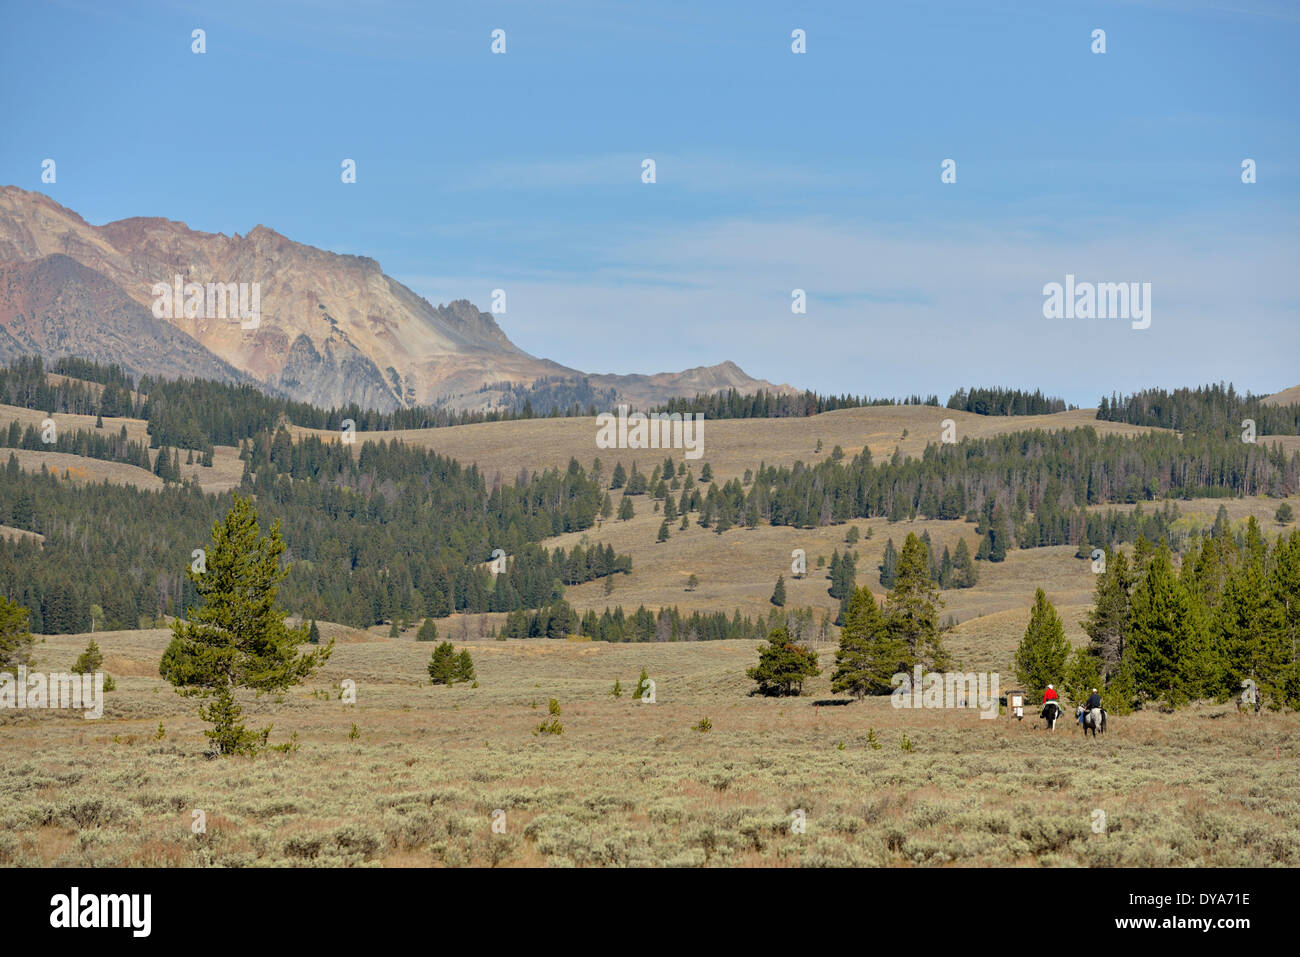 Amerika, Wyoming, USA, Vereinigte Staaten, Yellowstone, Nationalpark, UNESCO, Weltkulturerbe, Natur, Landschaft, Reiten, Pferde Stockfoto